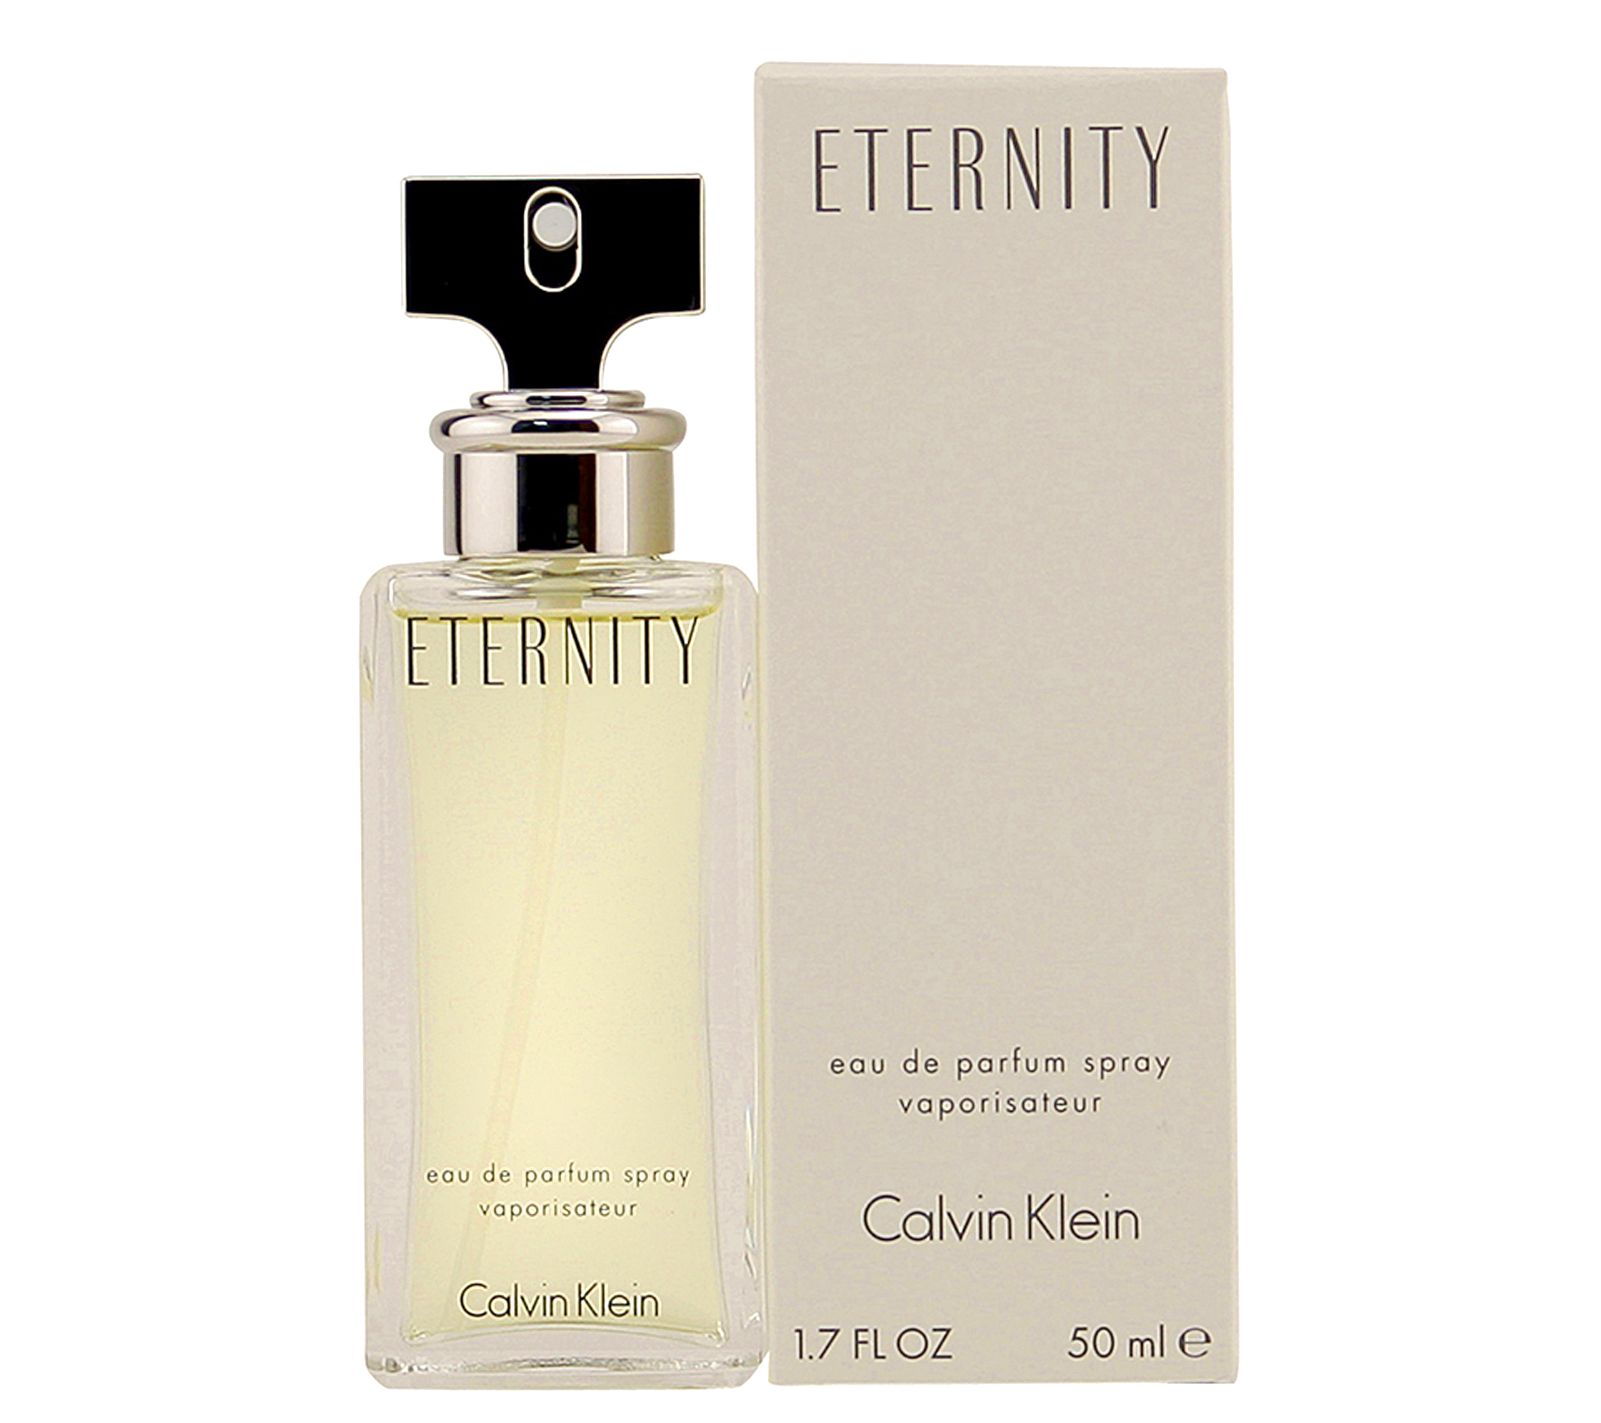 Calvin Klein Eternity Eau Parfum oz - QVC.com